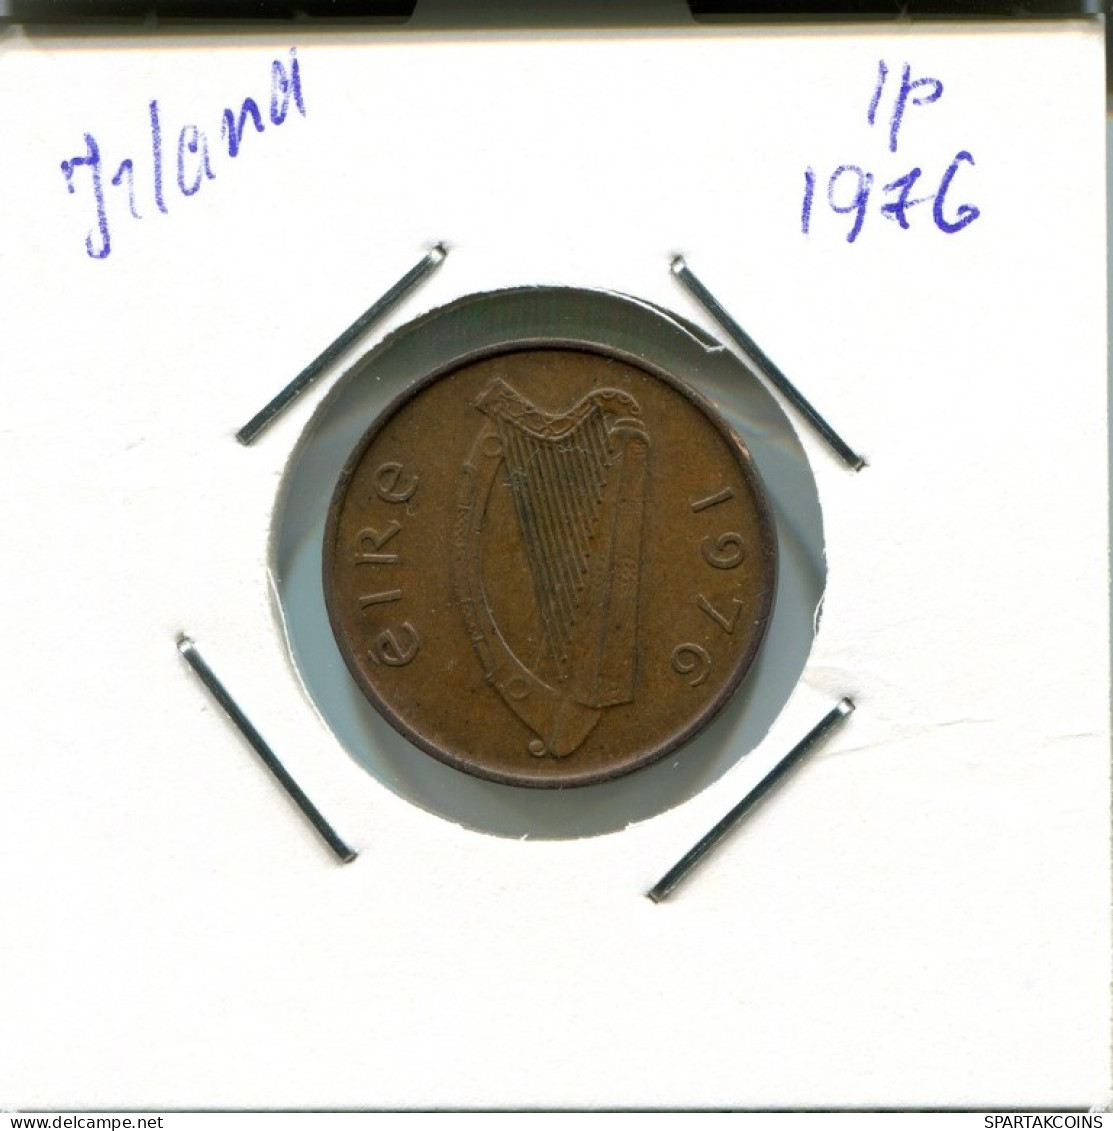 1 PENNY 1976 IRLAND IRELAND Münze #AN640.D.A - Ireland